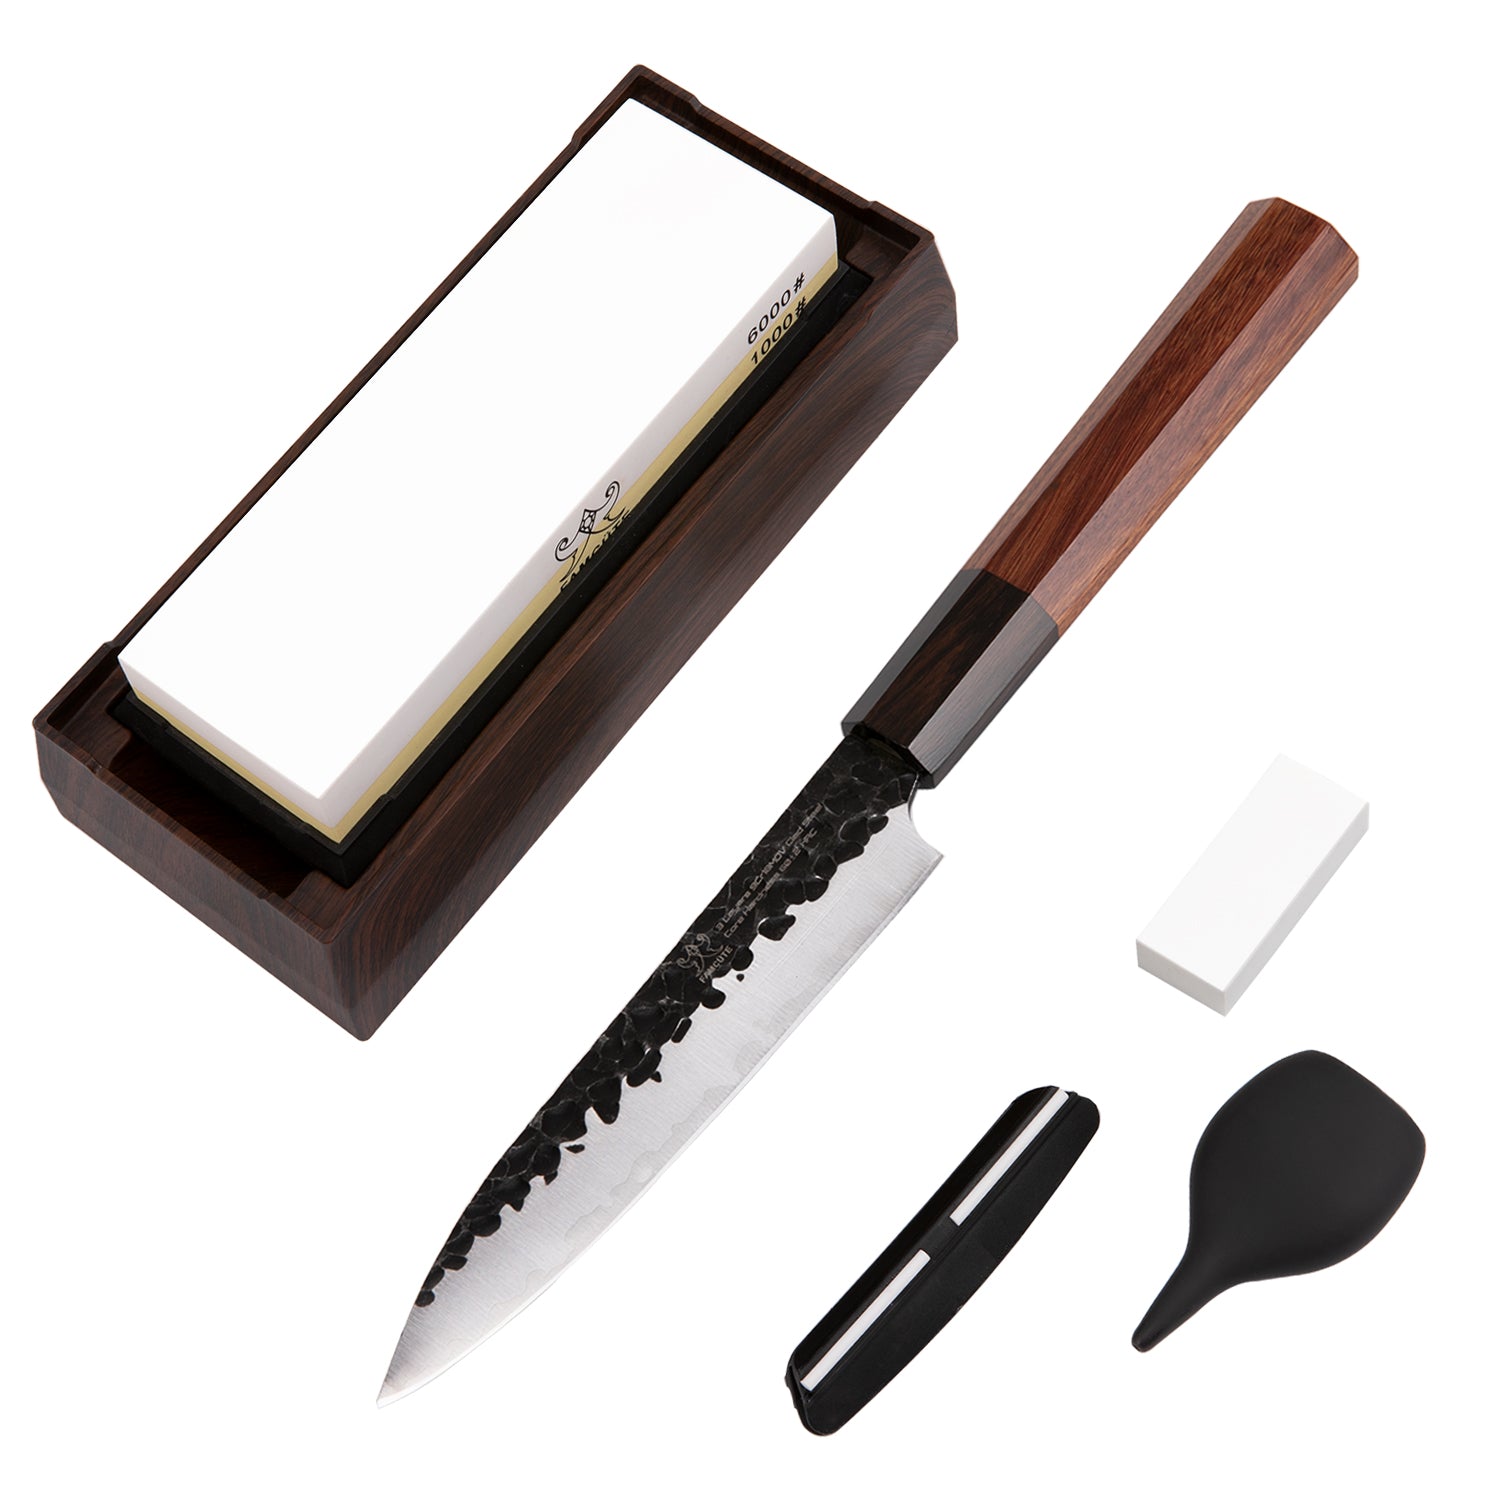  FAMCÜTE Japanese Chef Knife Set, 3 Layer 9CR18MOV Clad